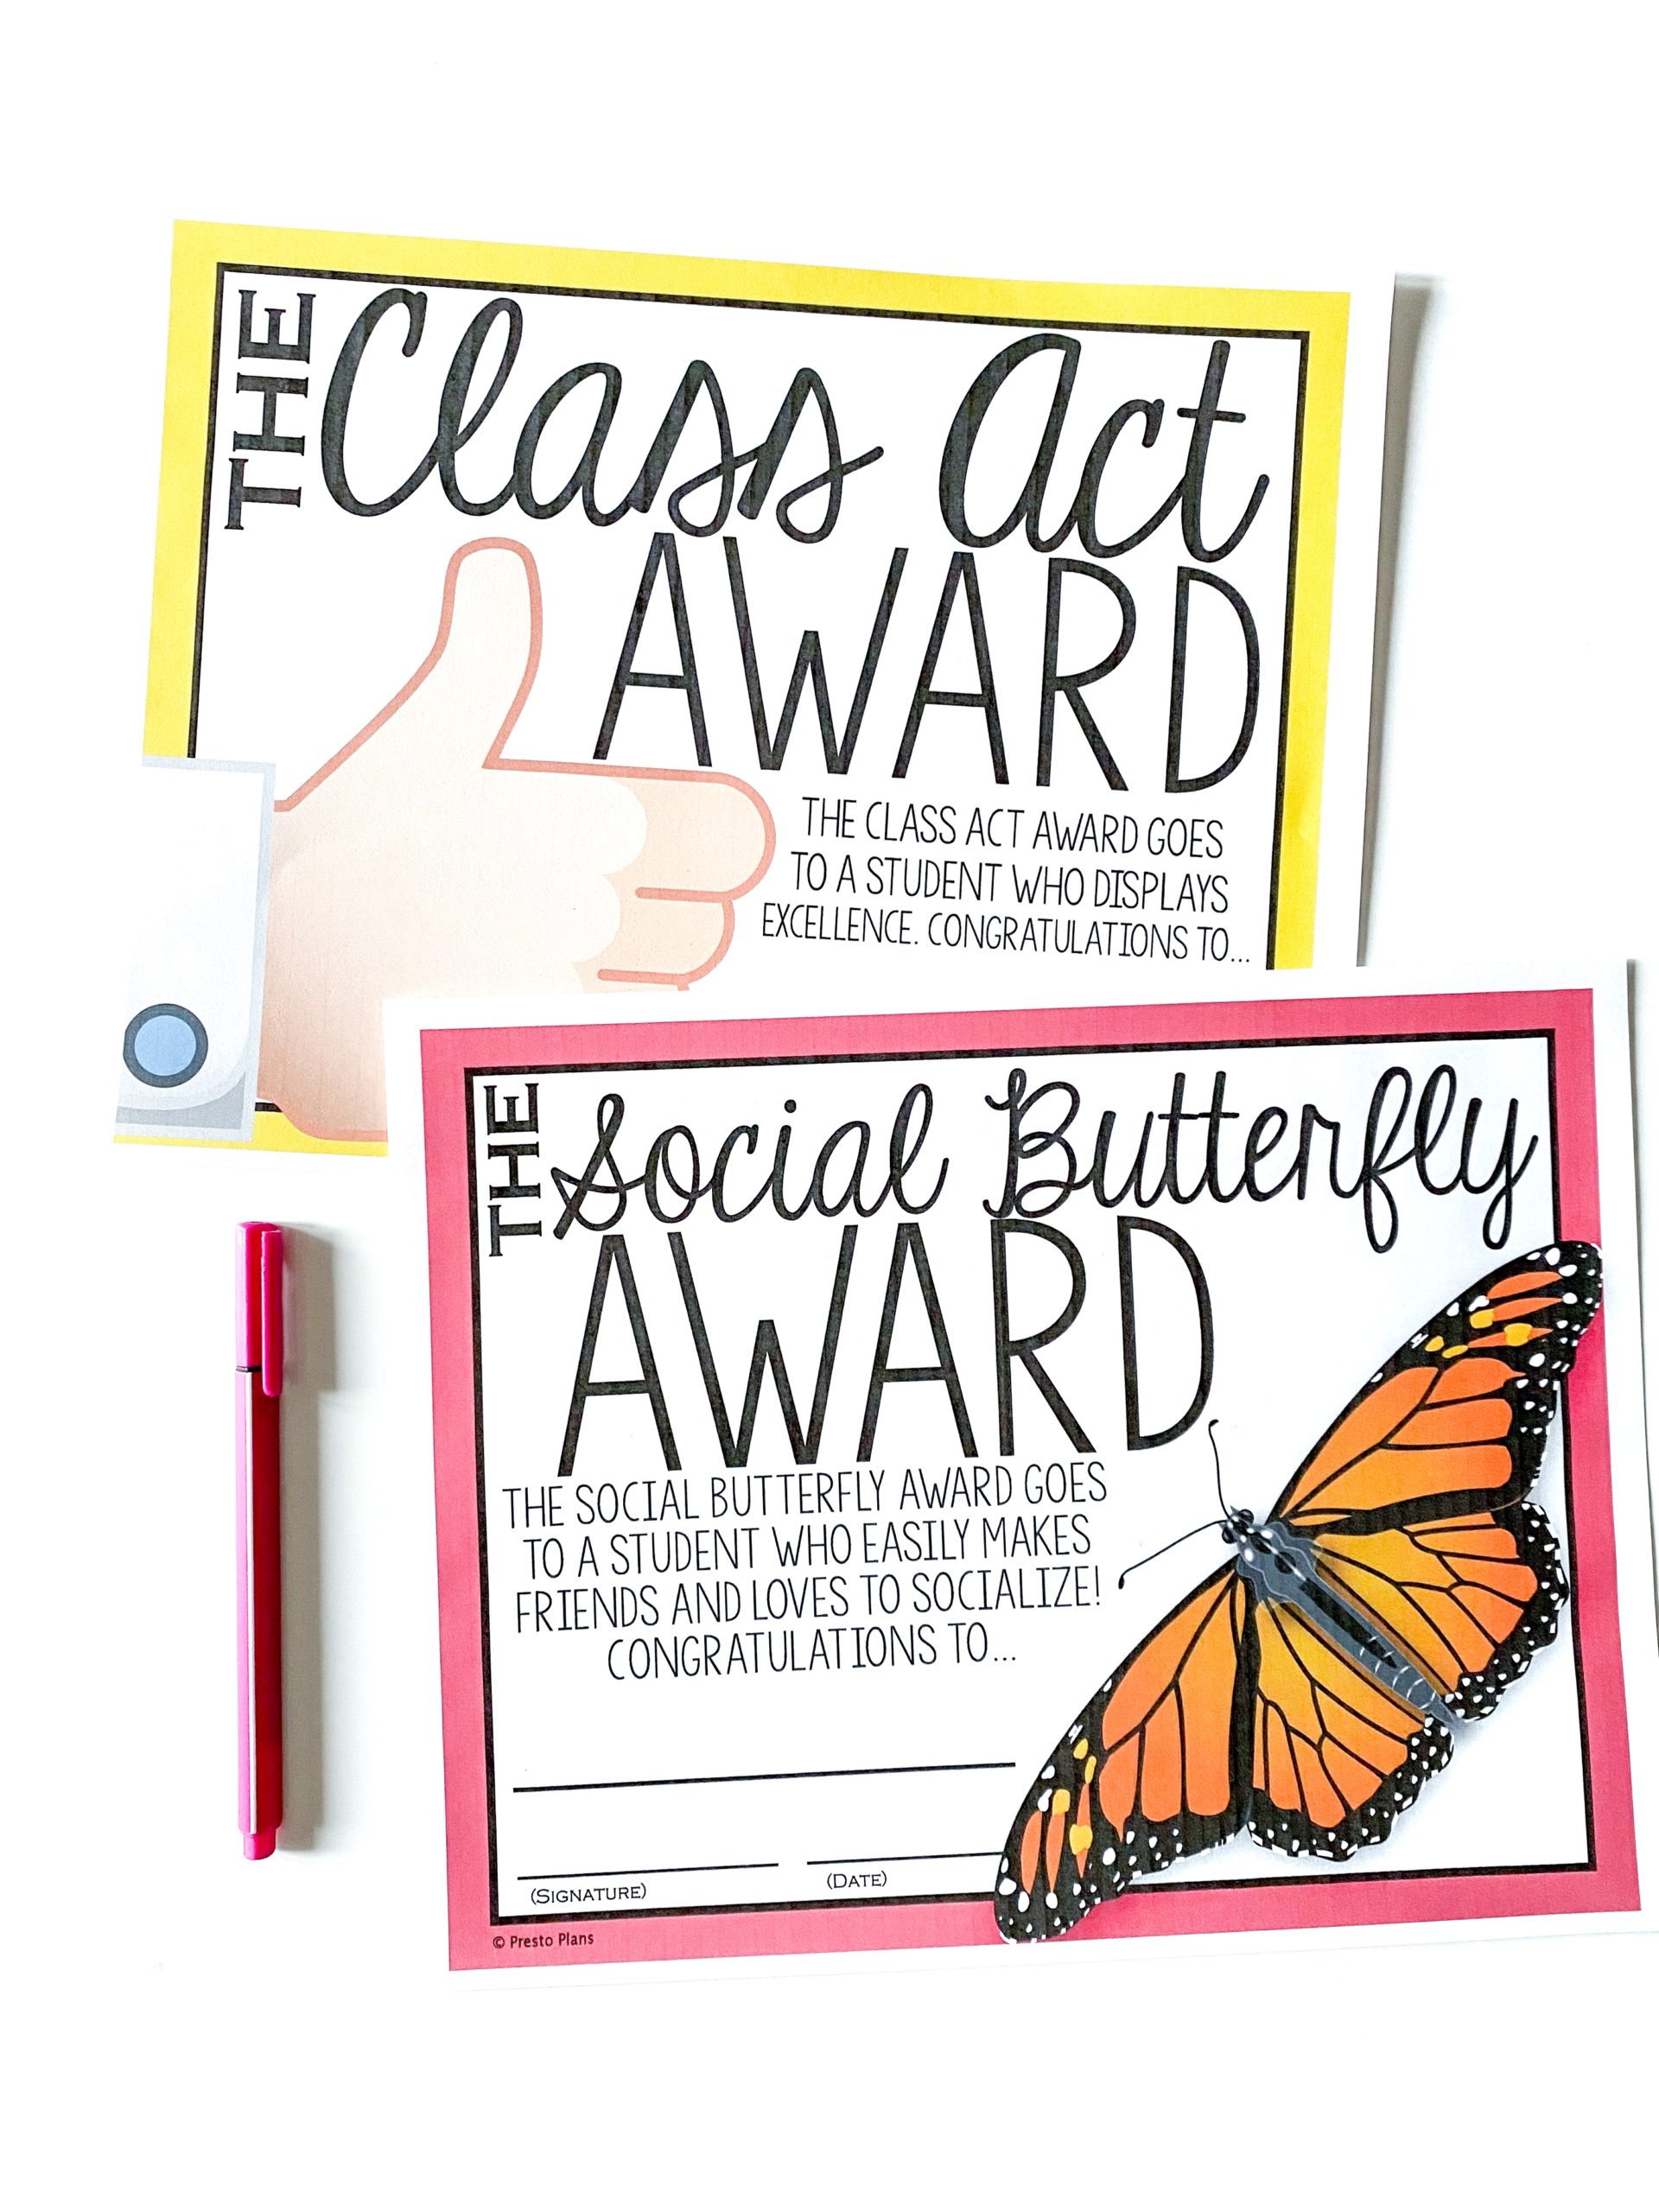 9 Creative Ideas for Student Awards - Presto Plans